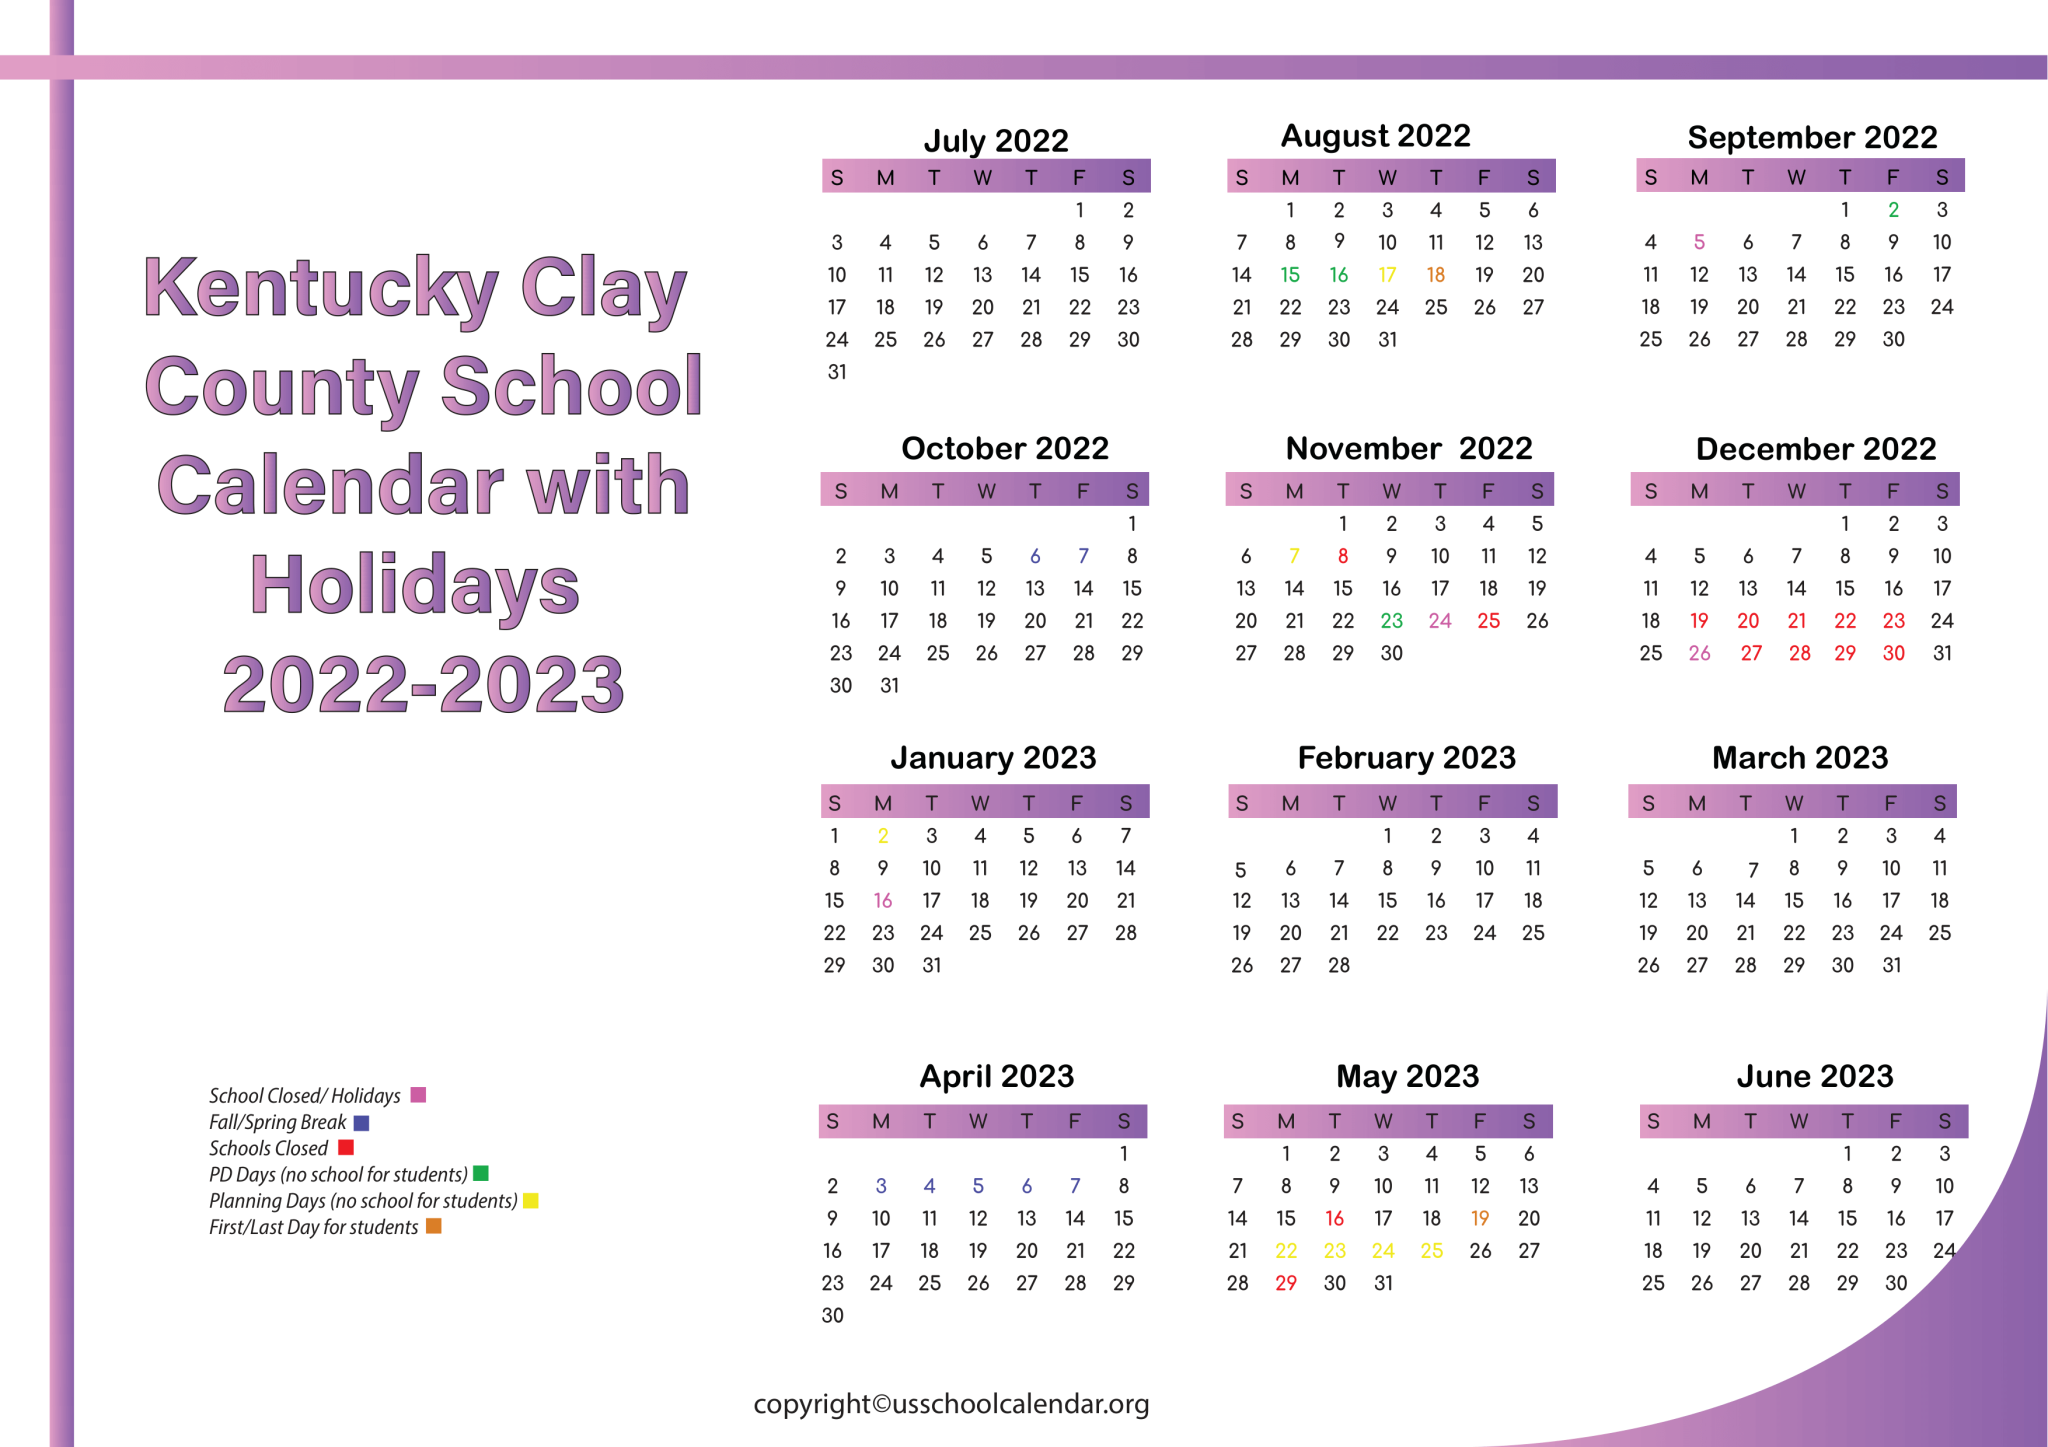 kentucky-clay-county-school-calendar-with-holidays-2022-2023